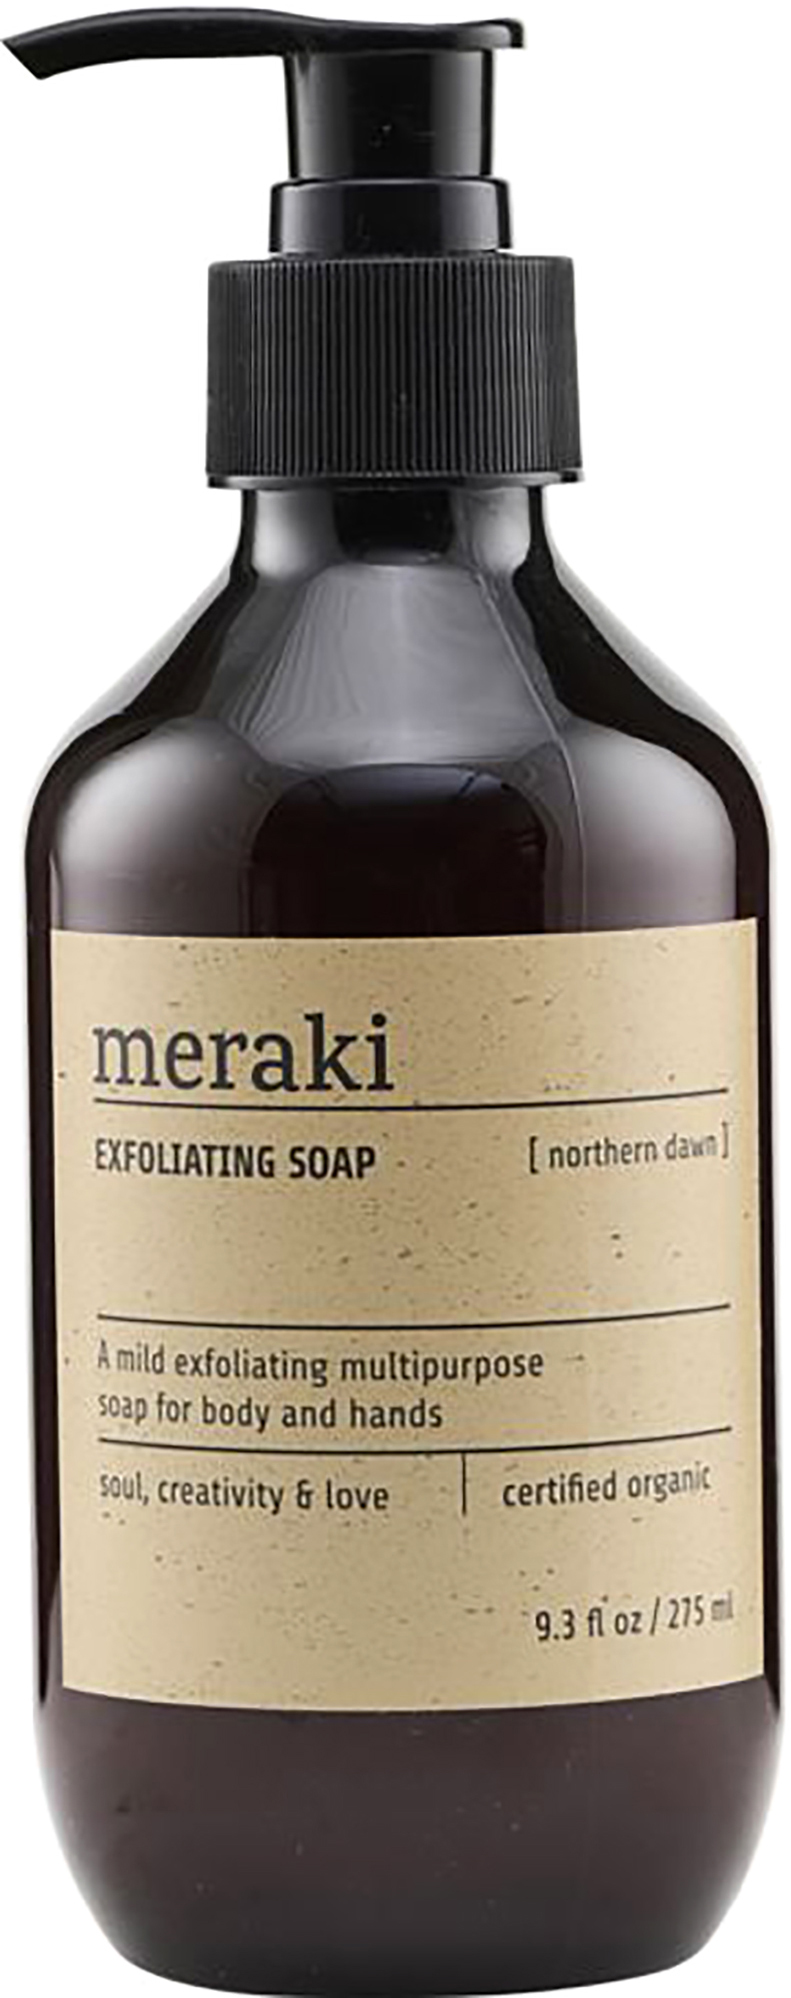 Meraki Northern dawn Exfoliating Soap 275 ml